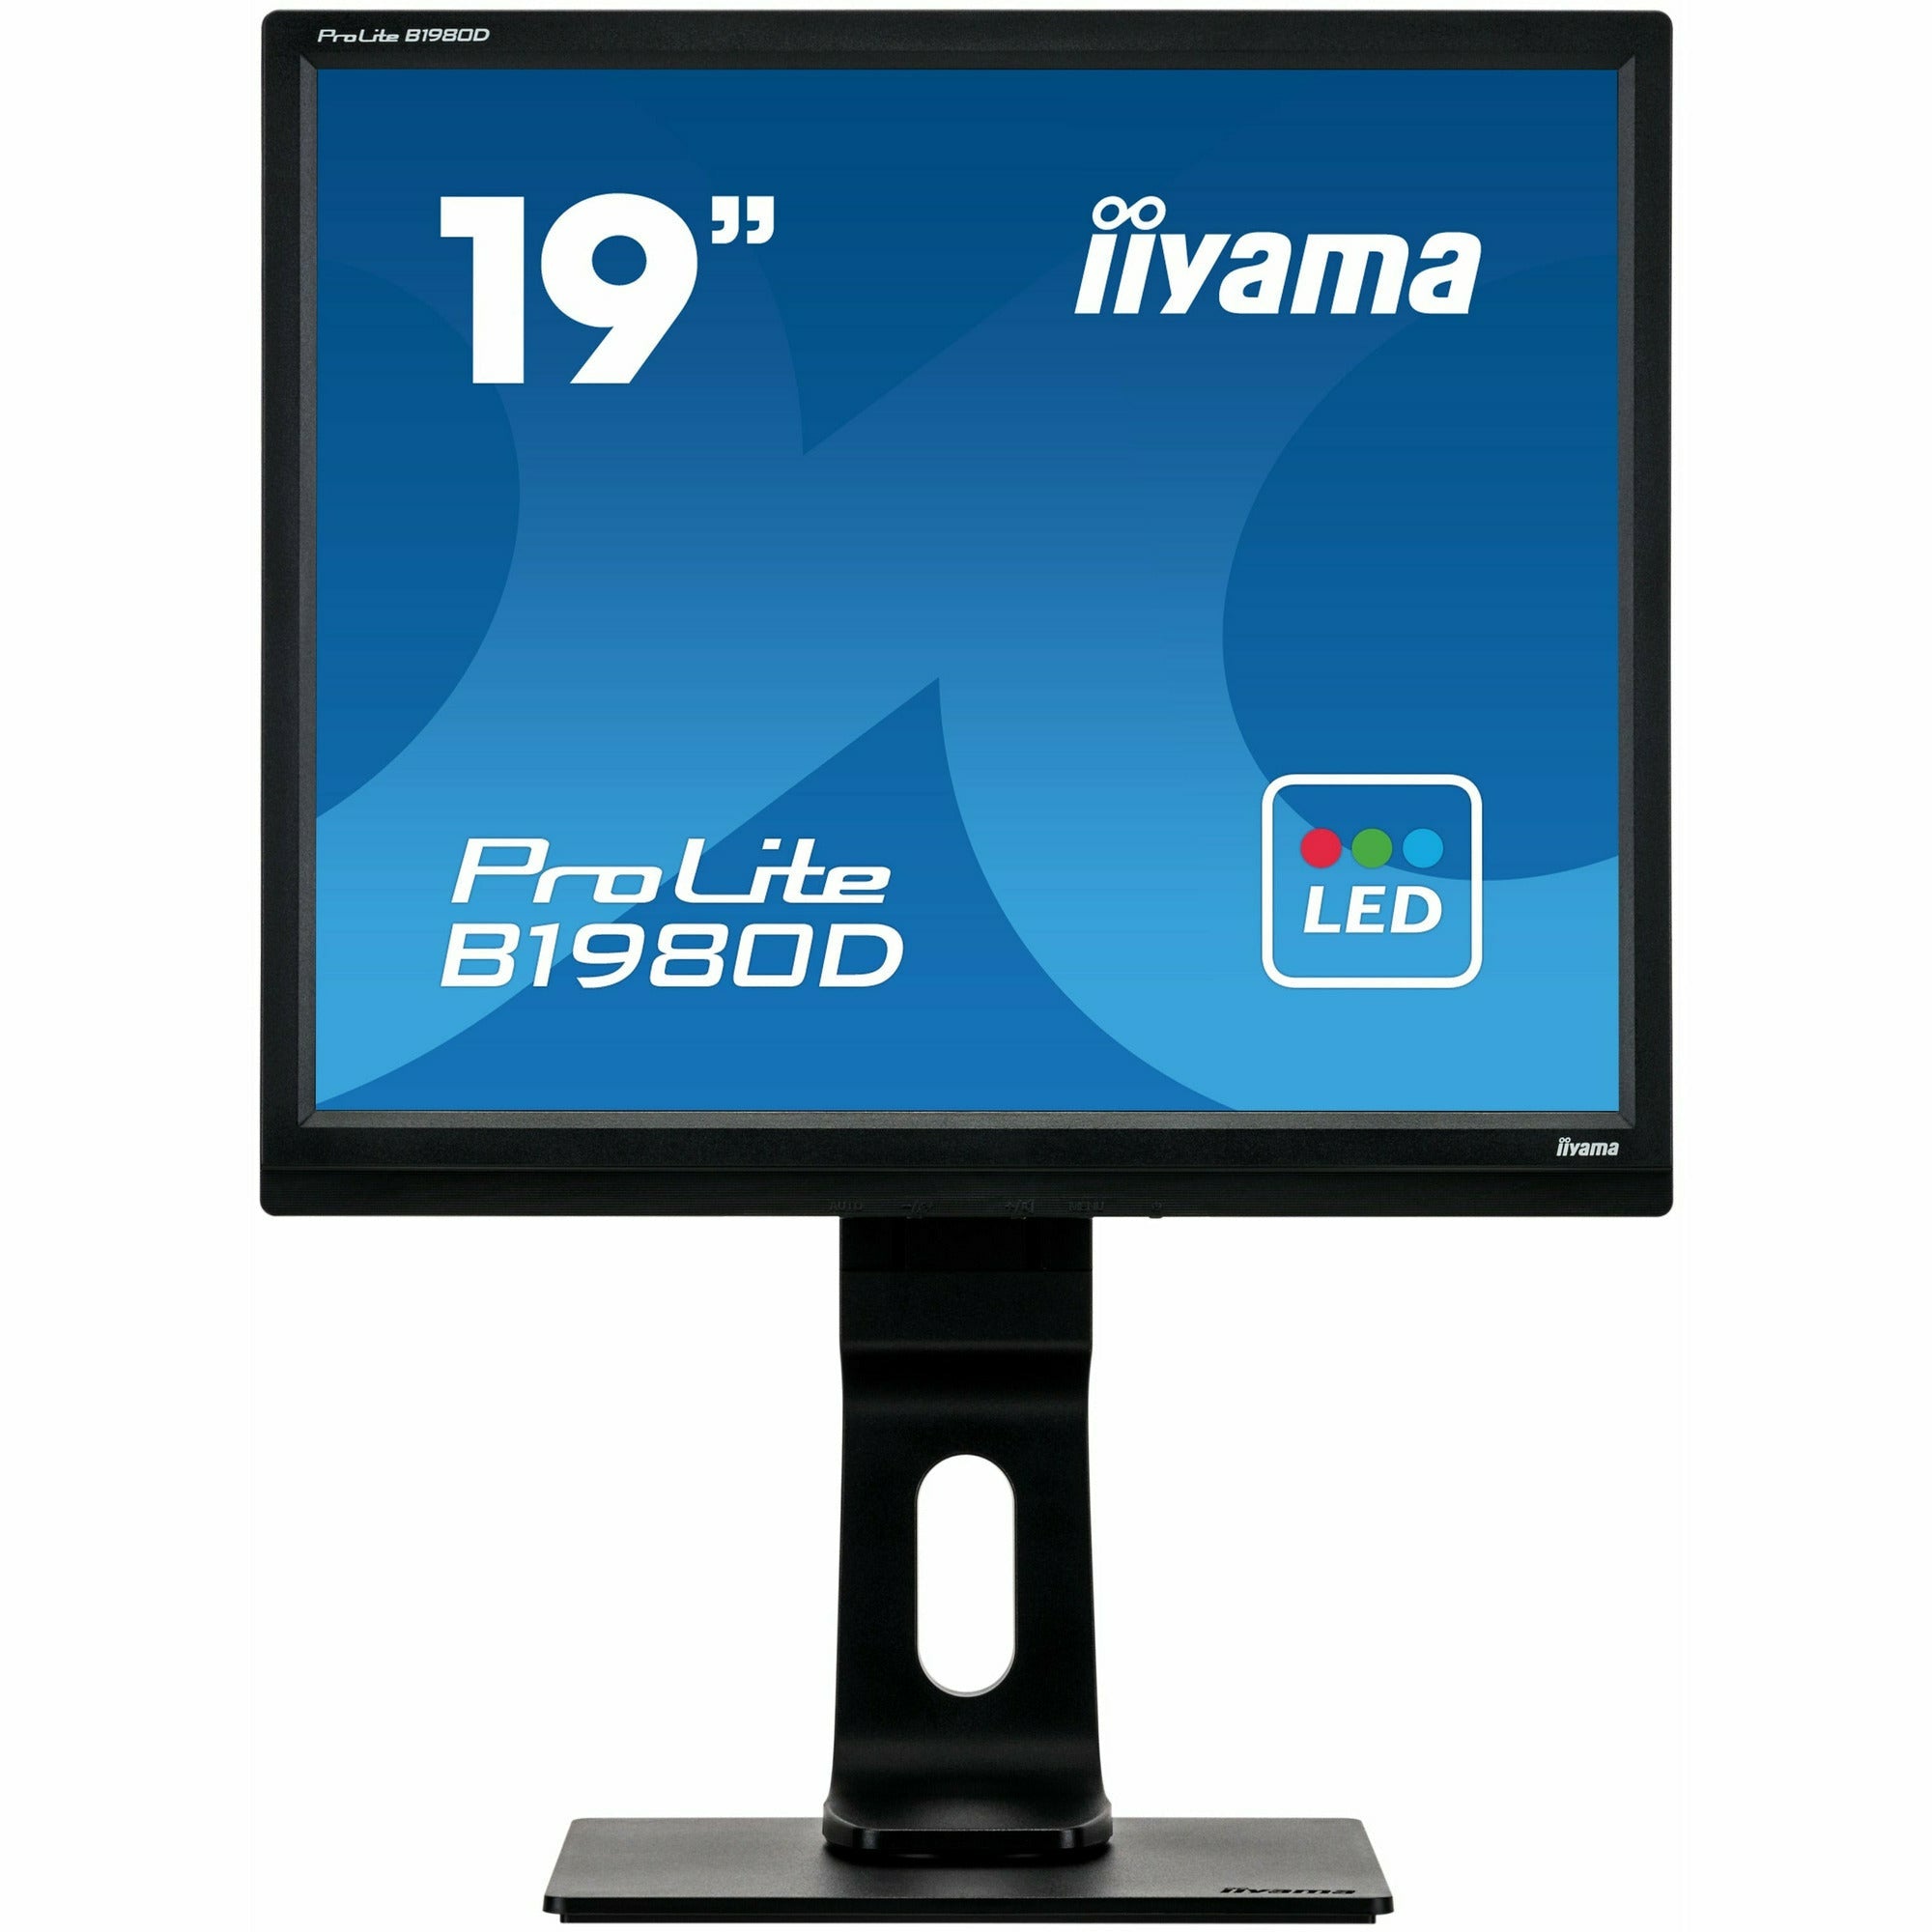 iiyama ProLite B1980D-B1 19" TN LED-backlit Monitor